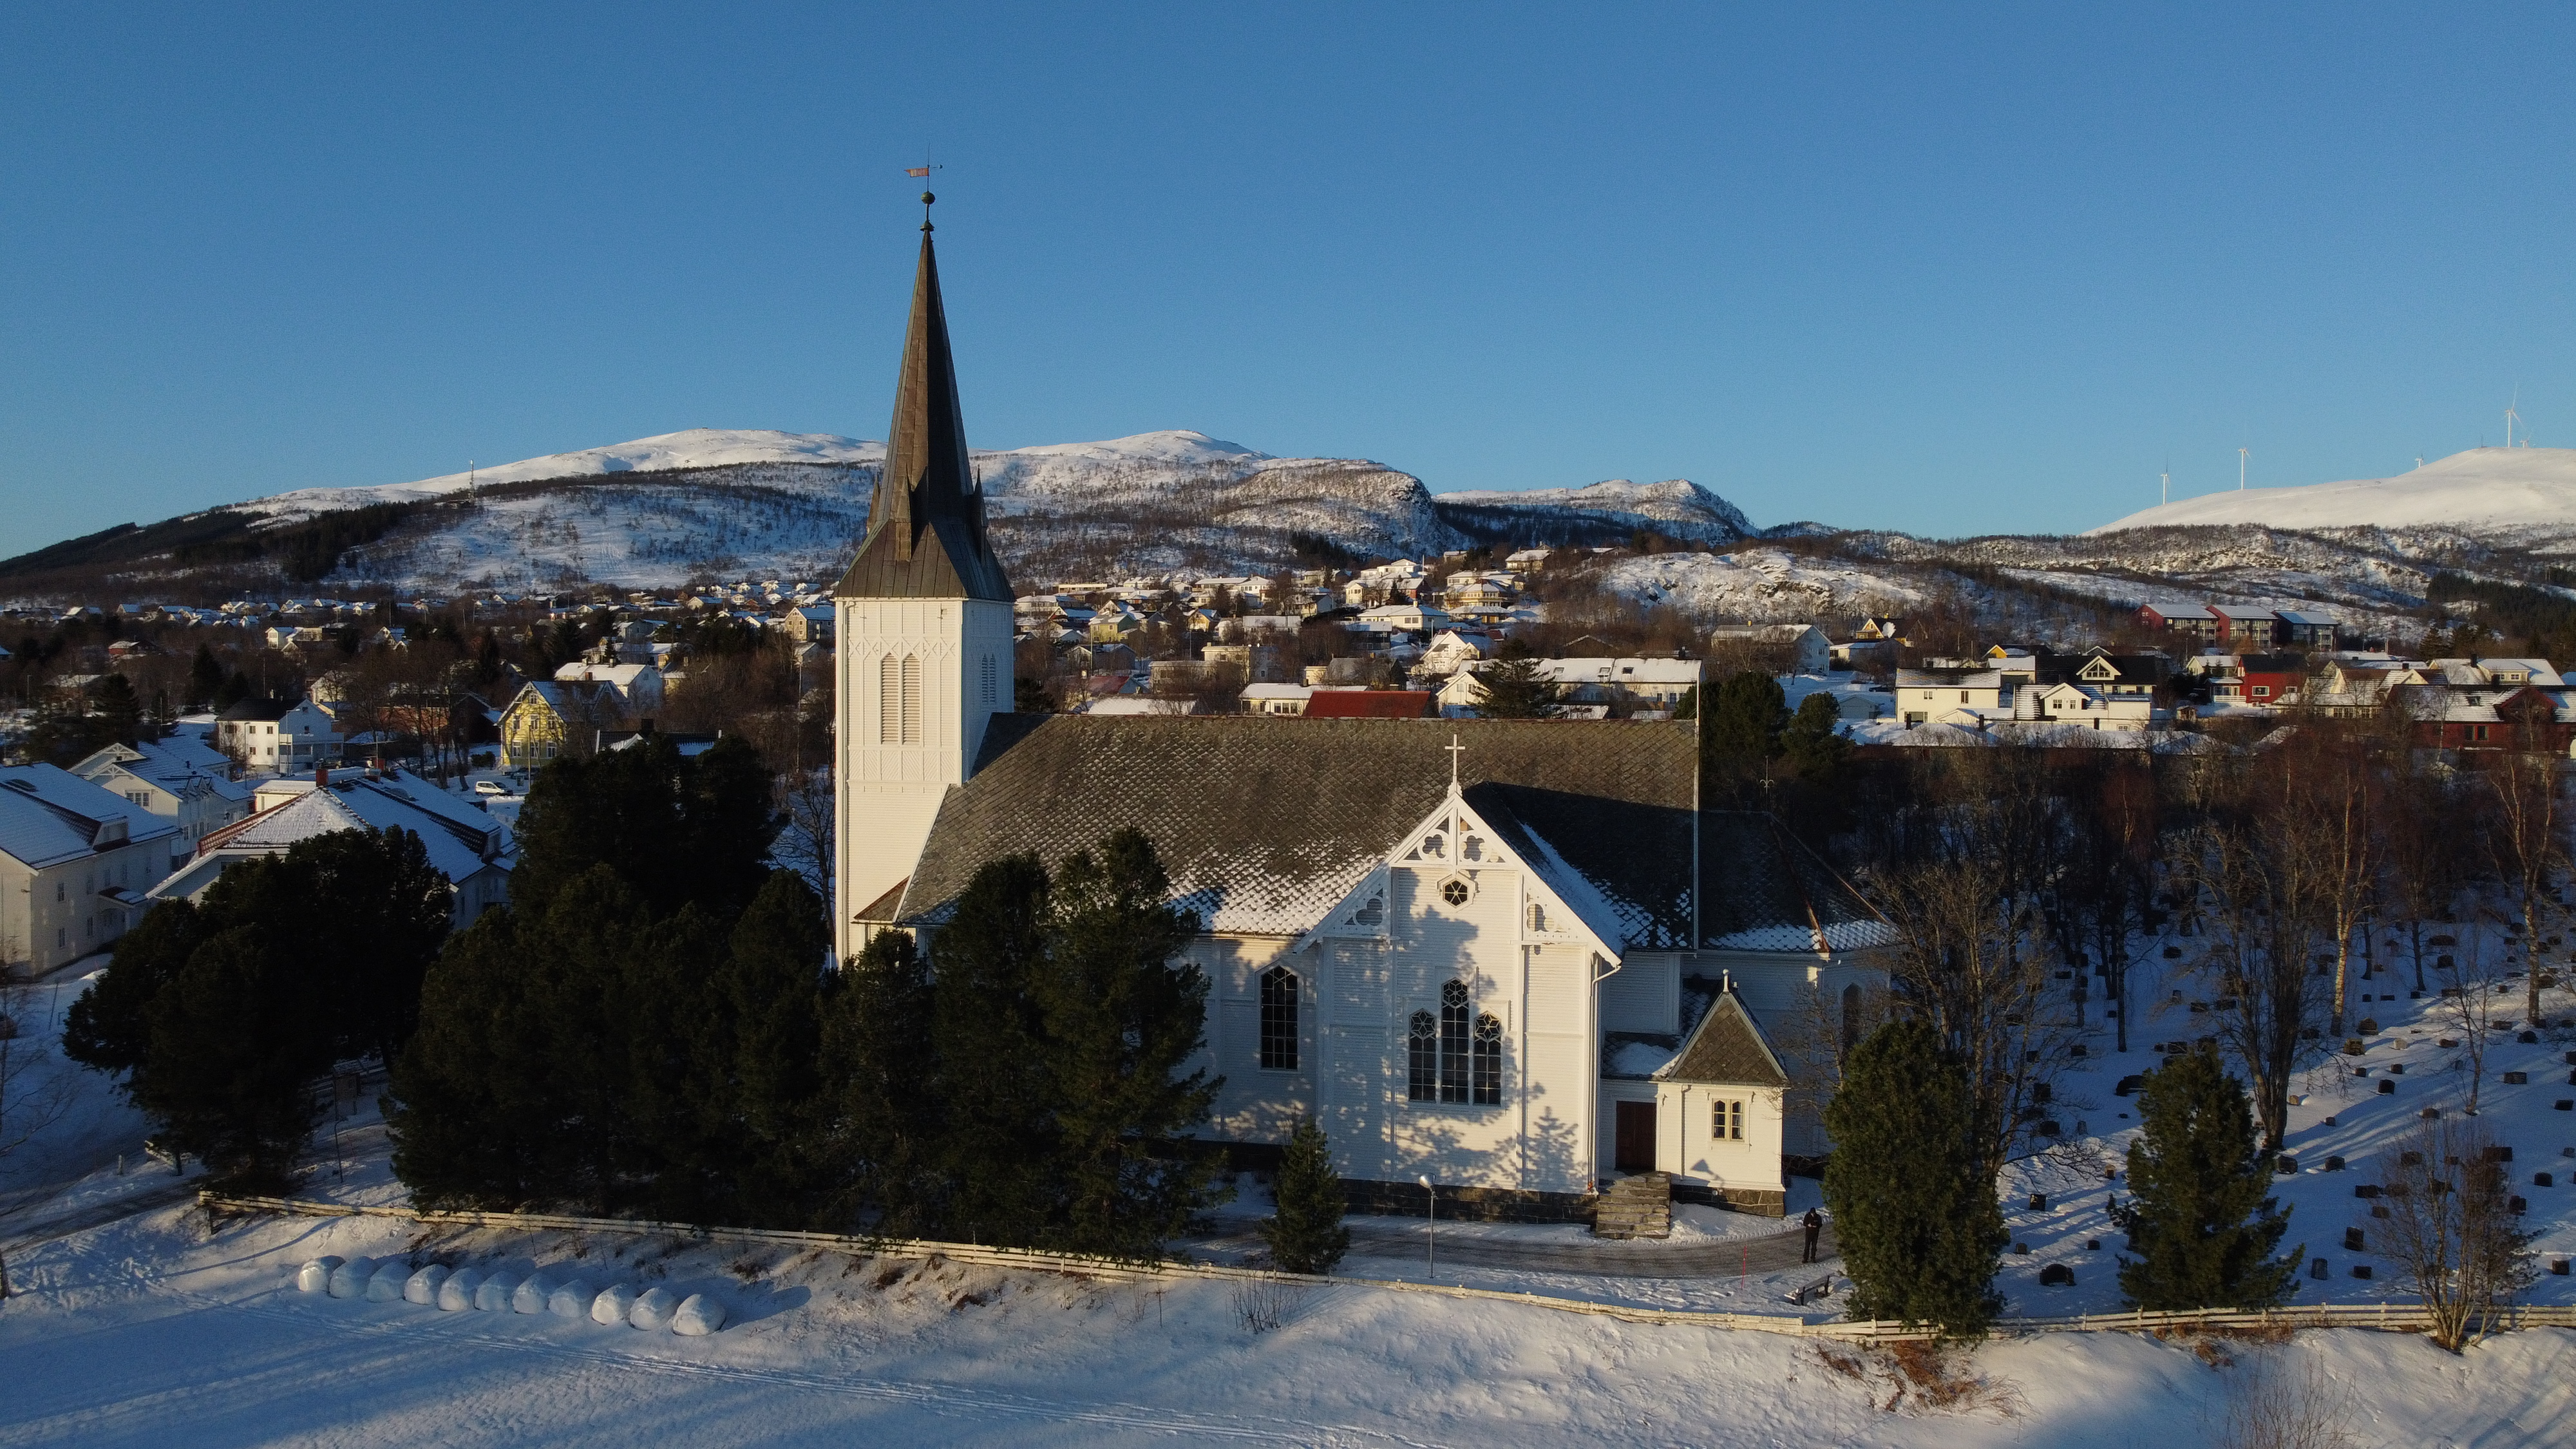 Foto: Sortland kirke av Tommy Amundsen